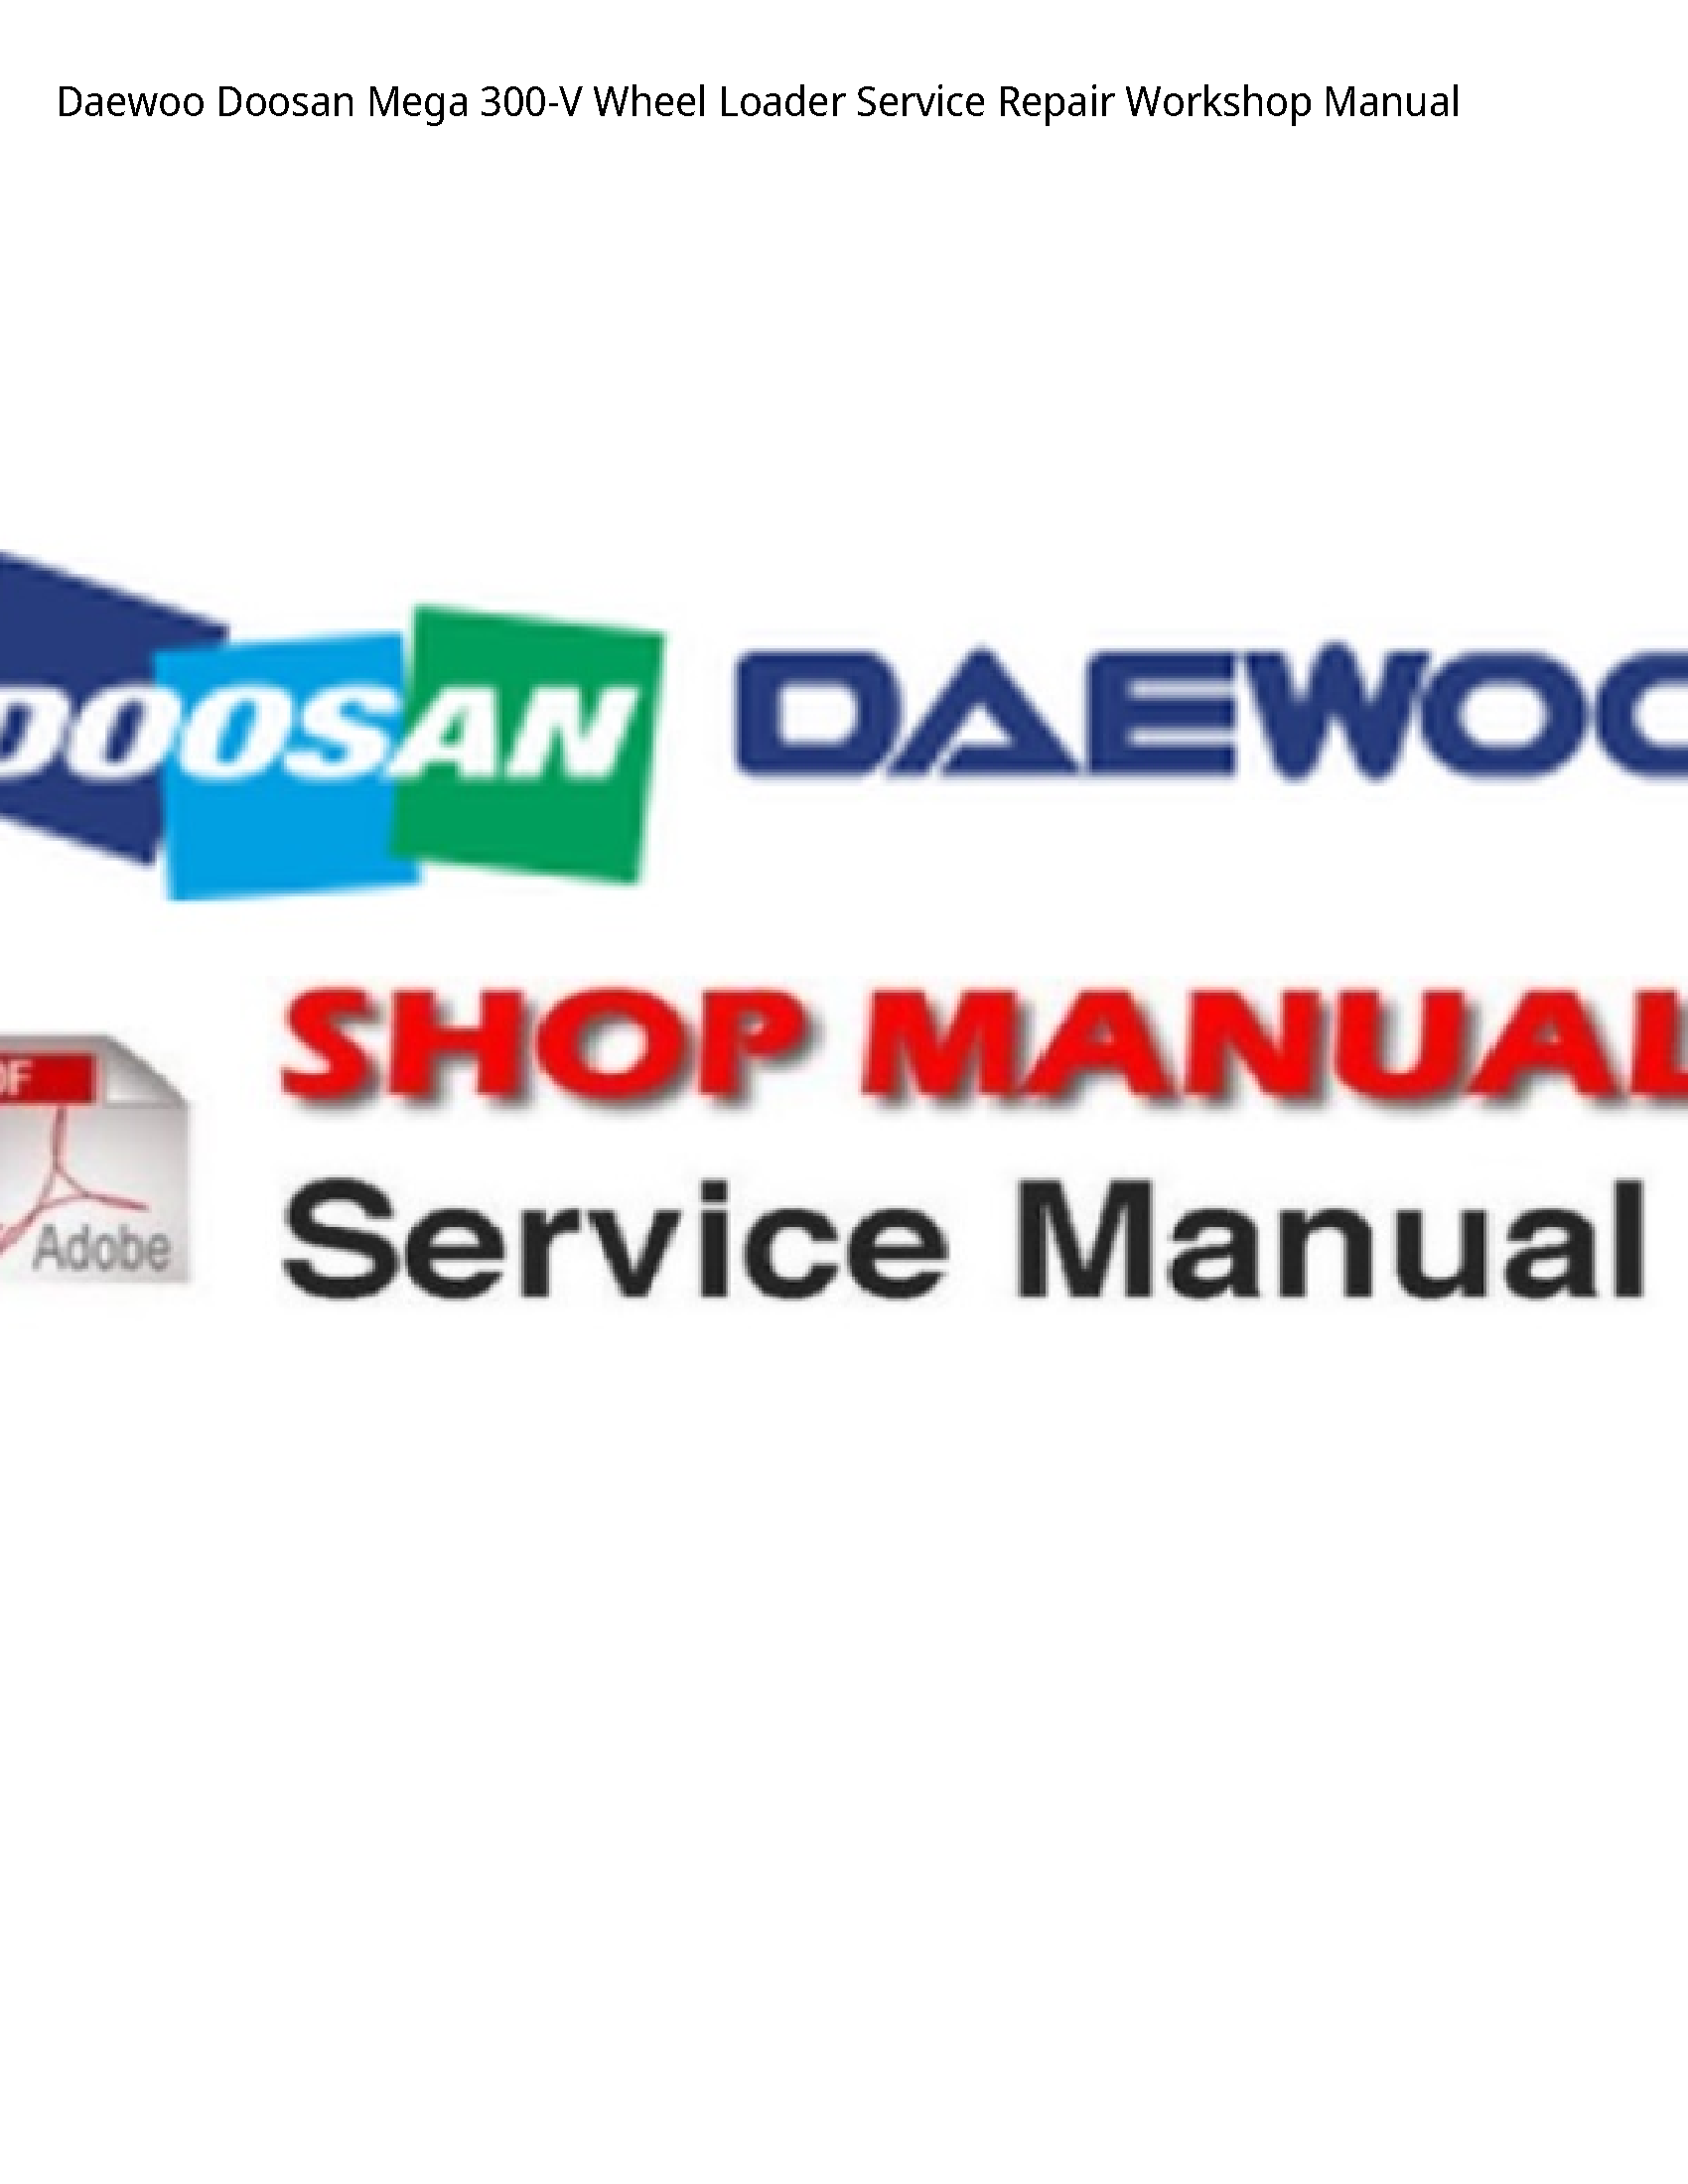 Daewoo Doosan 300-V Mega Wheel Loader manual